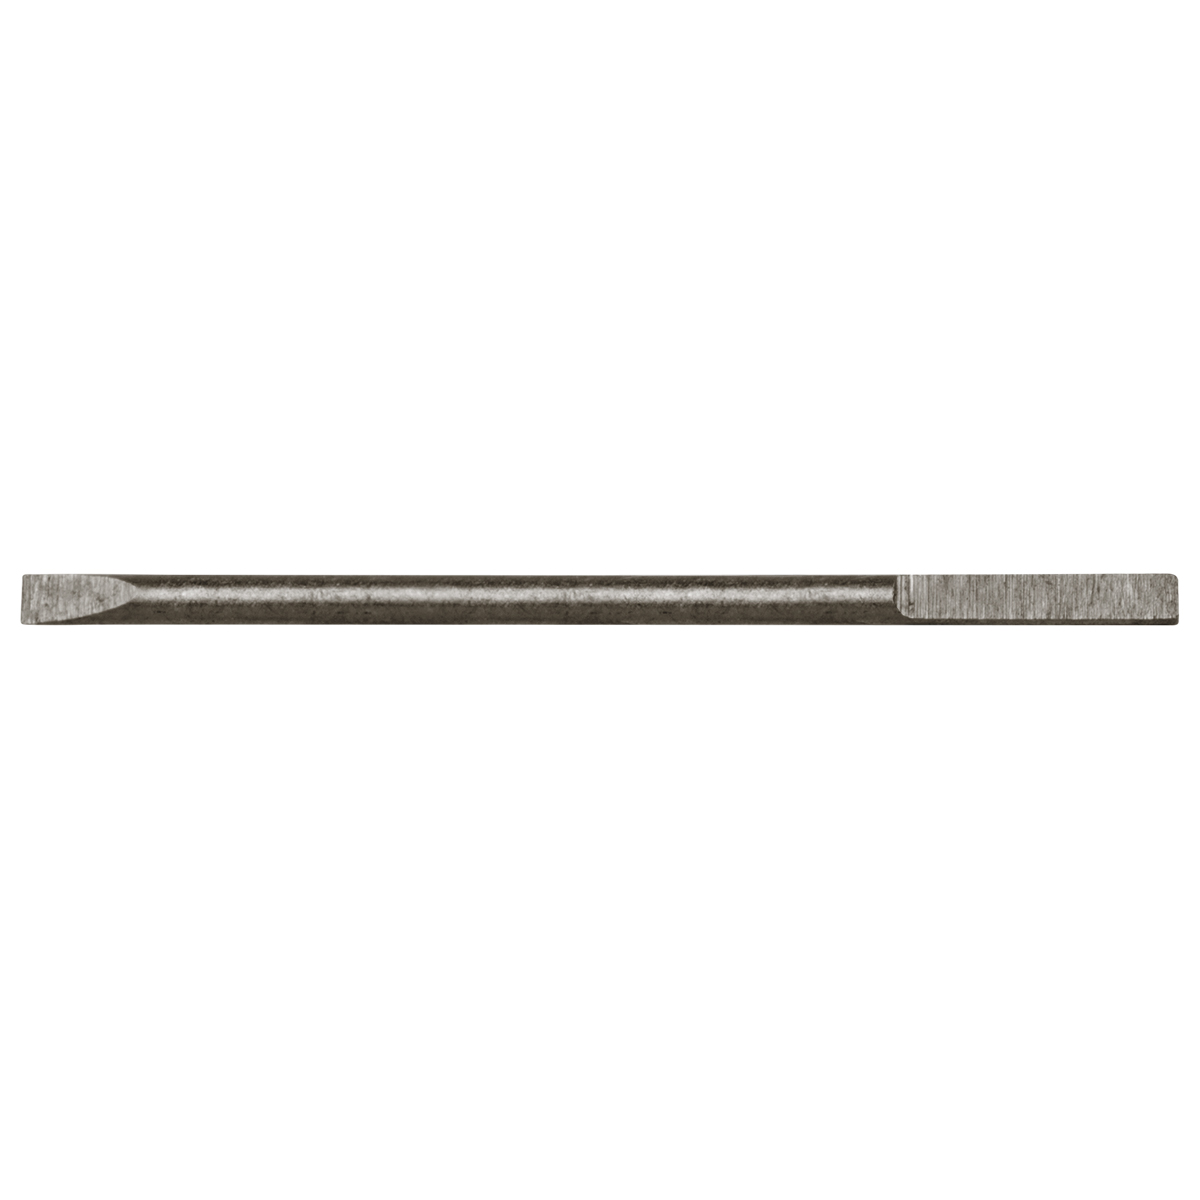 4 Blades for Ergo screwdriver, slot, 1,00 mm, standard taper, black, stainless steel